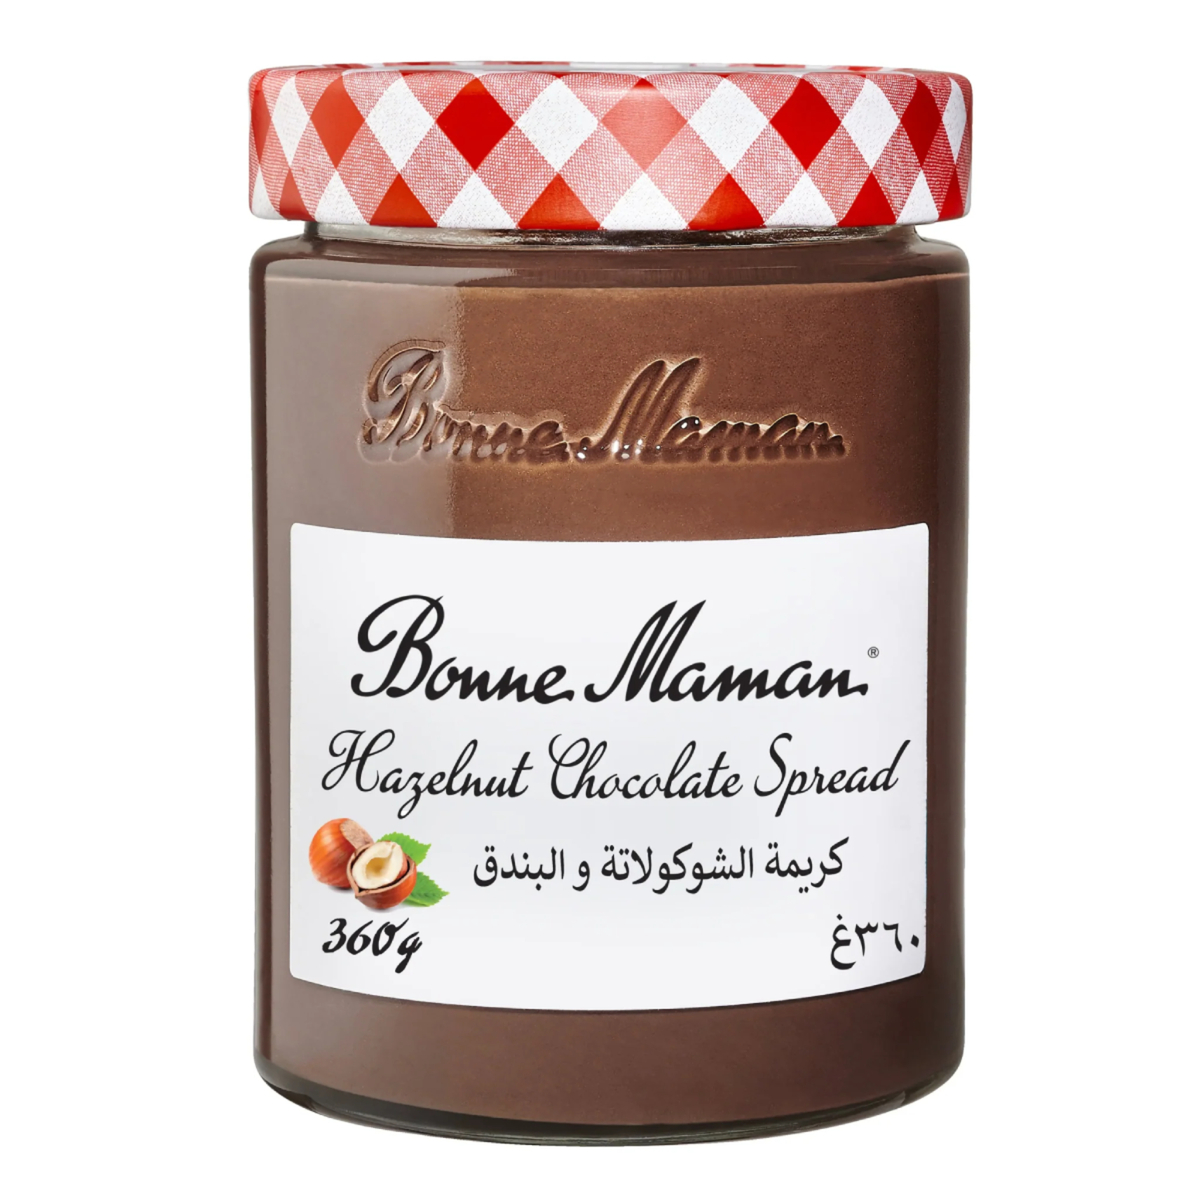 Bonne Maman Hazelnut Chocolate Spread 360 g